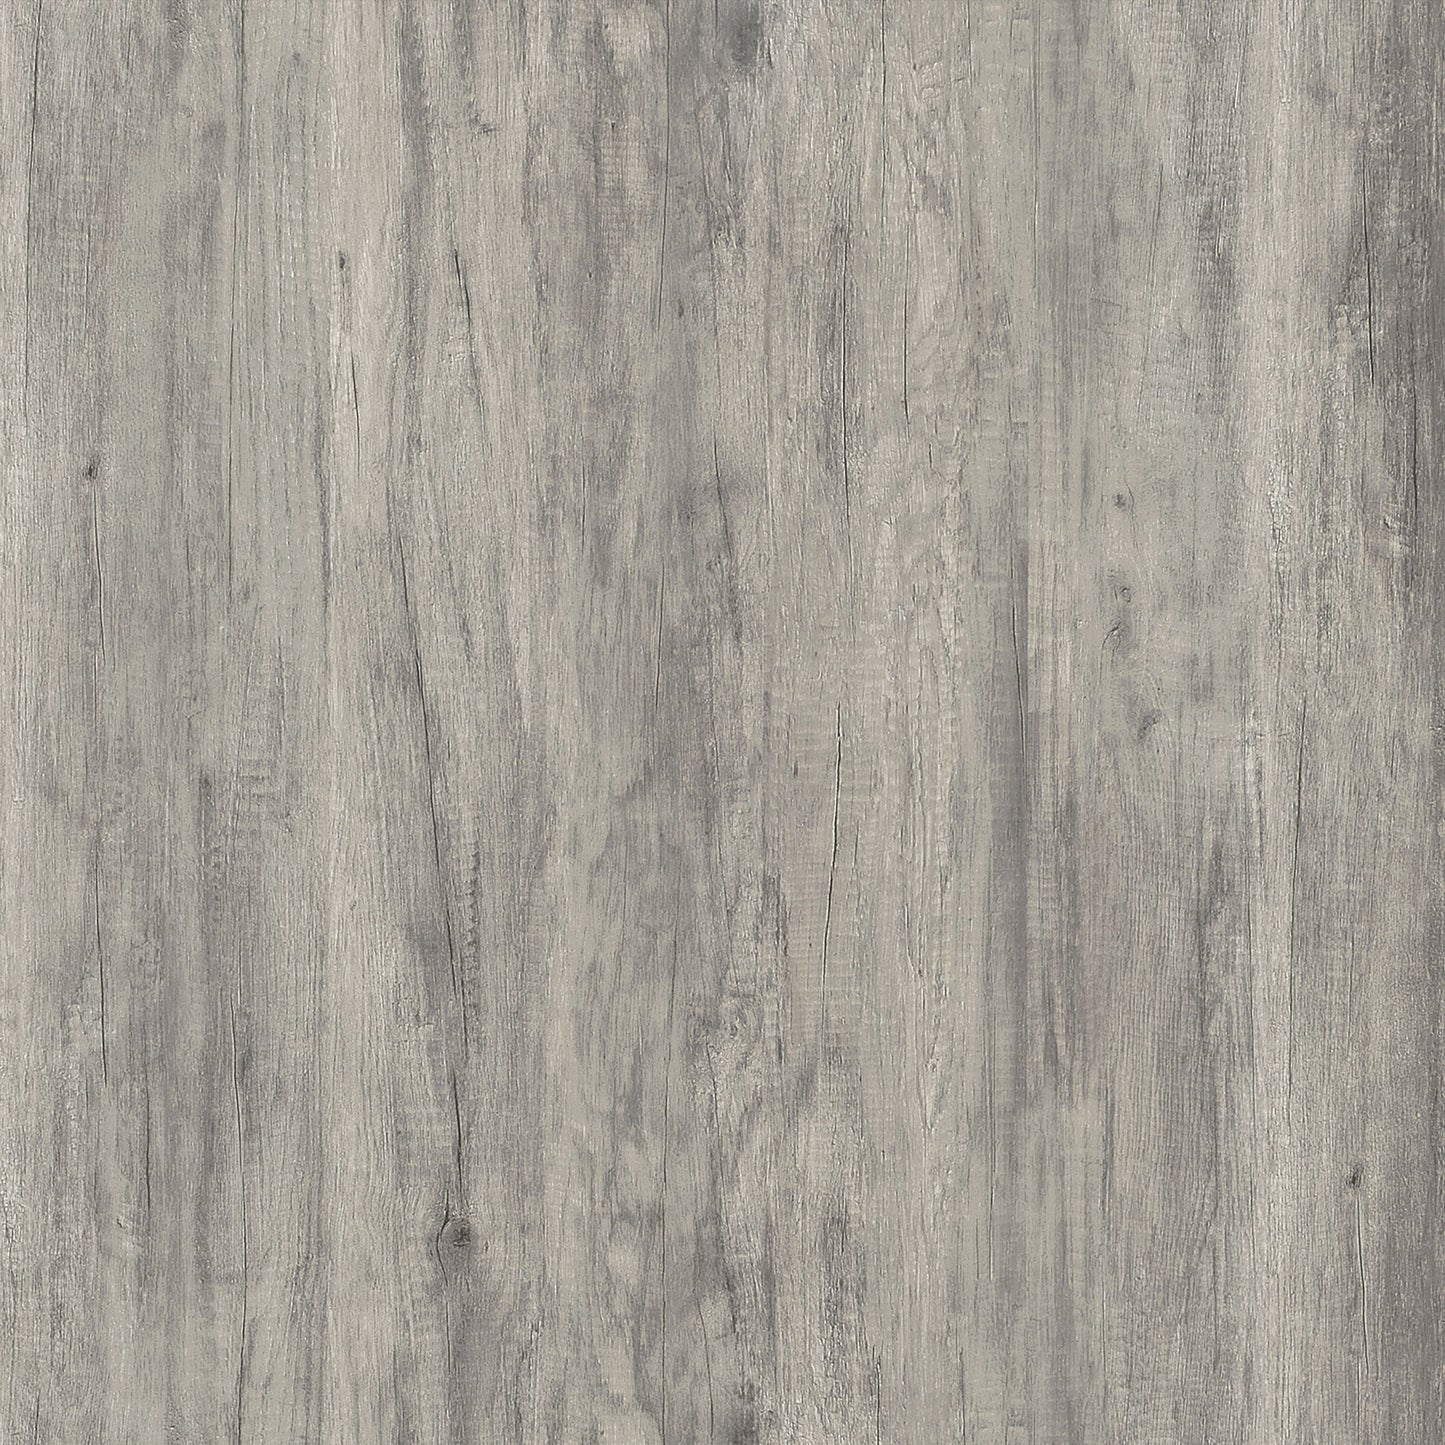 Alejo 2-door Tall Cabinet Grey Driftwood